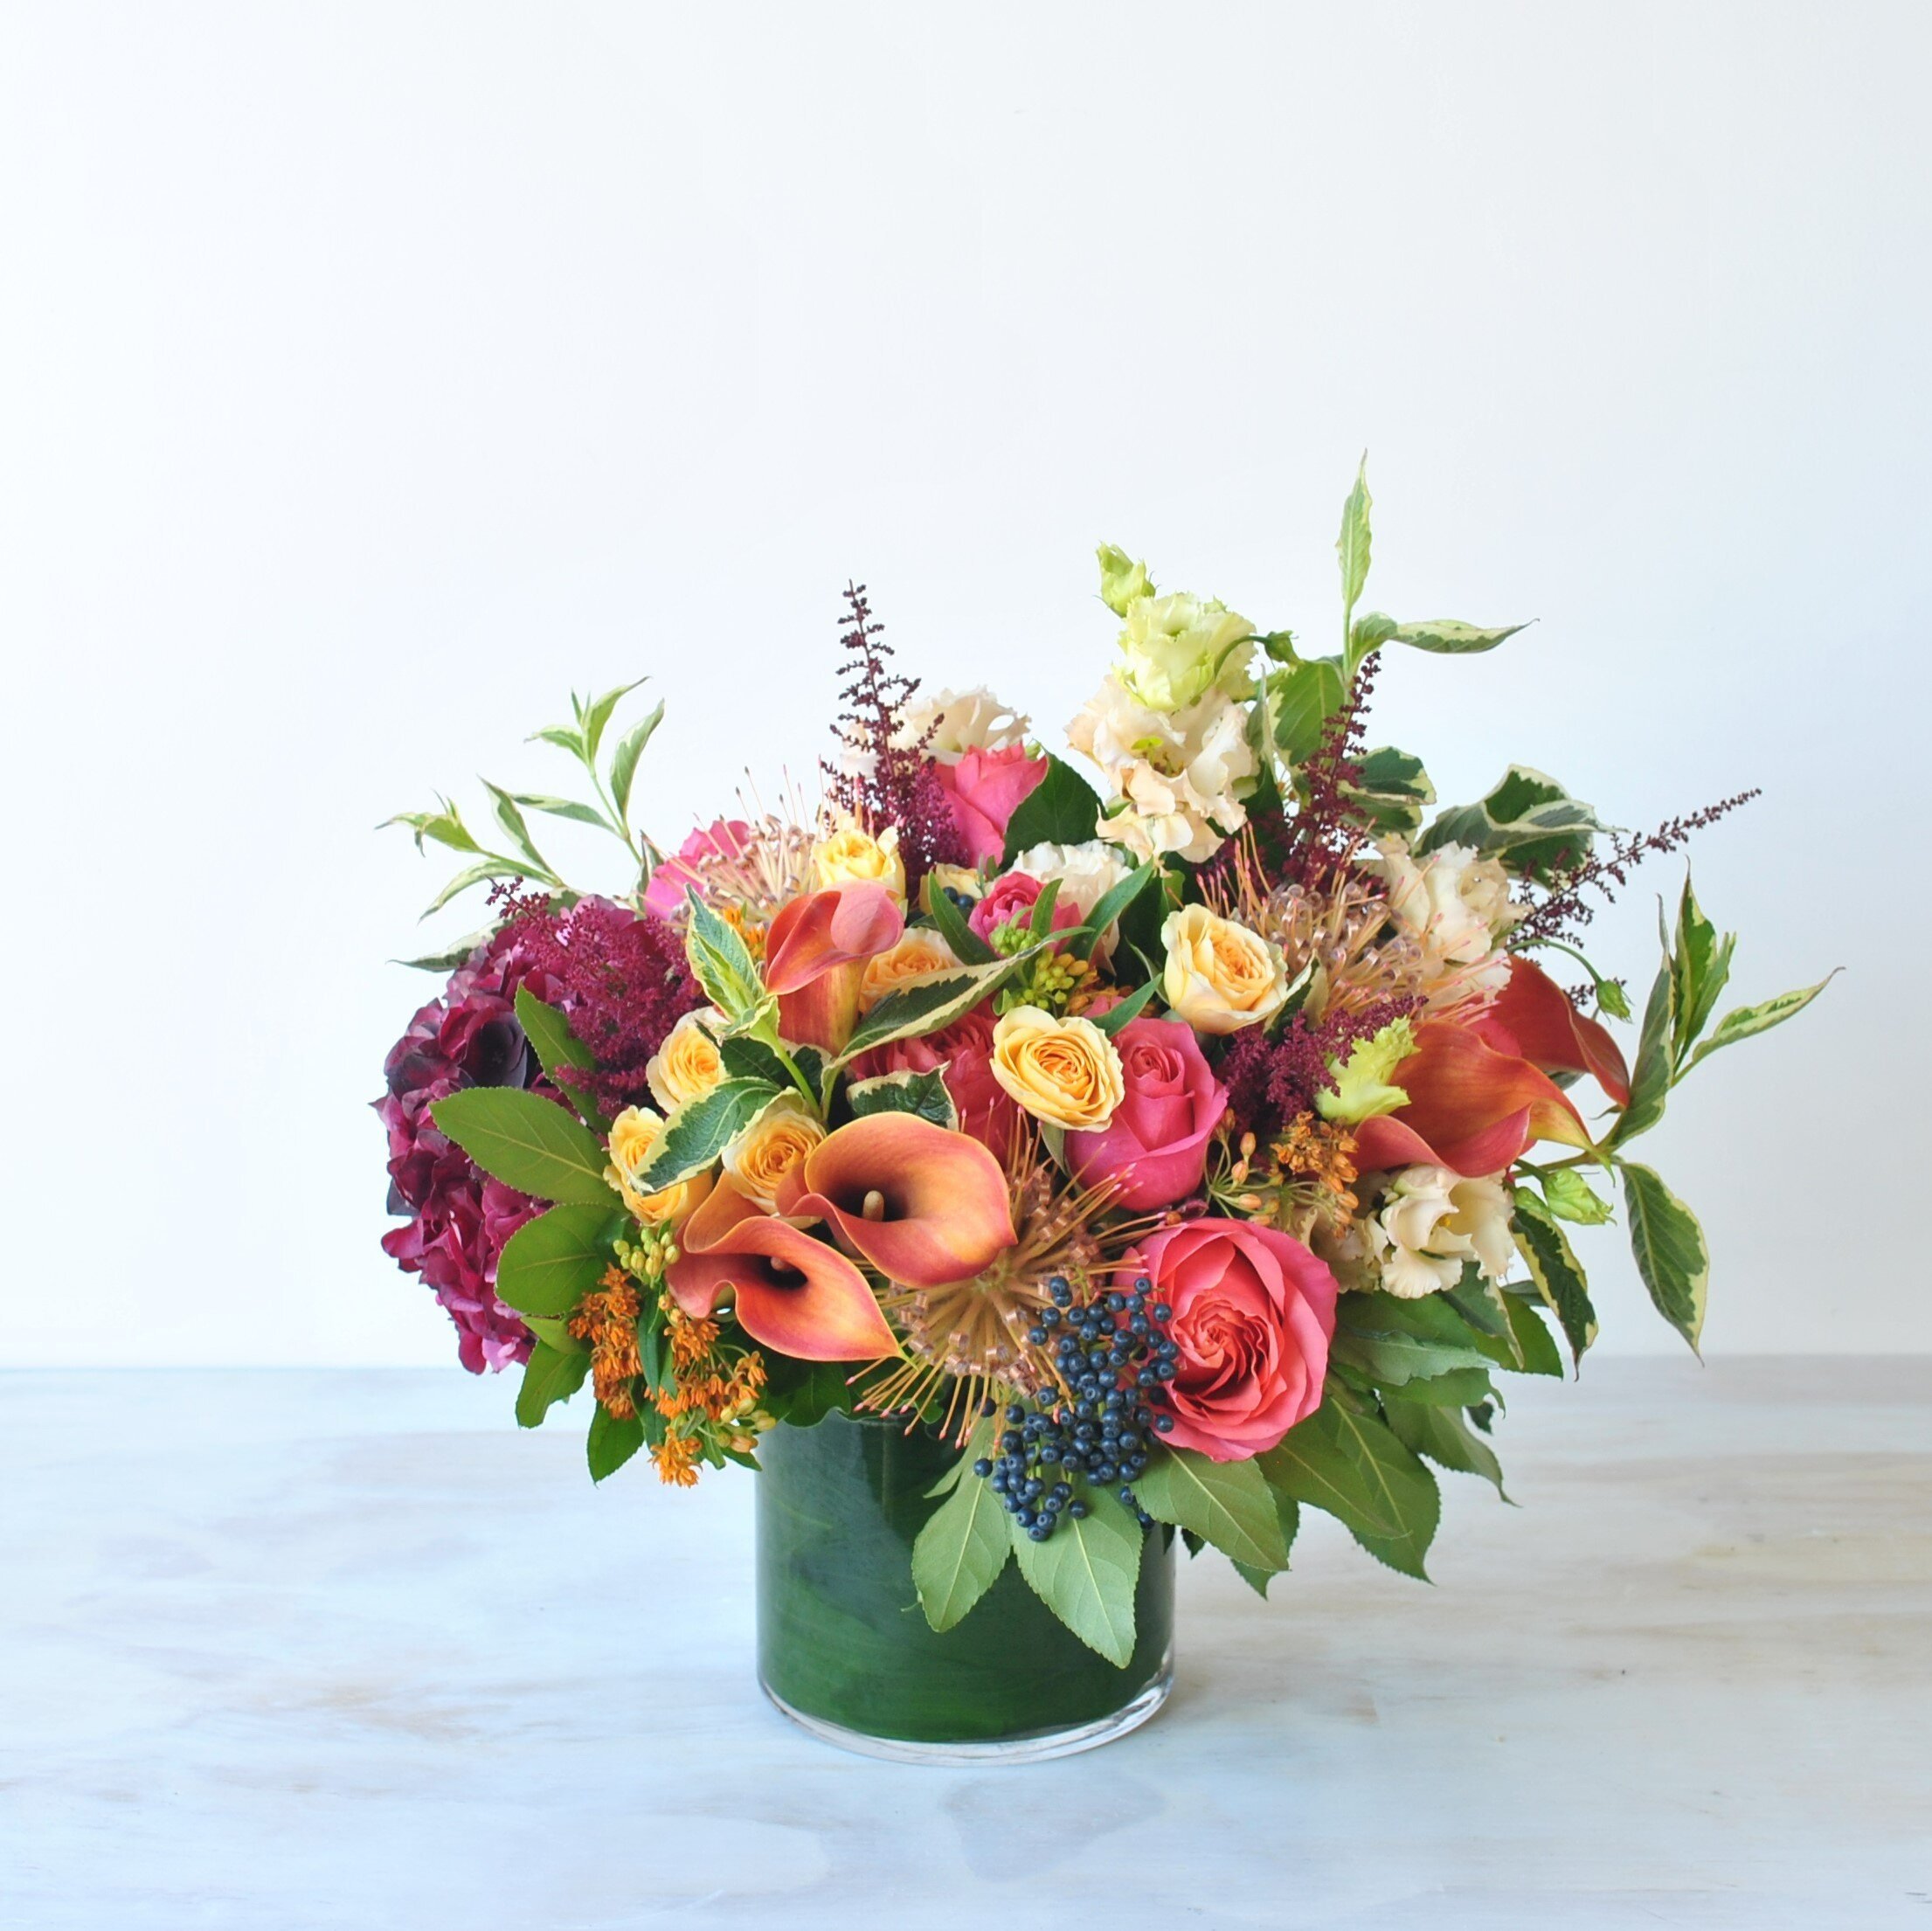 Rouvalis Flowers & Gardens, Boston's Luxury Florist Offering Flower ...